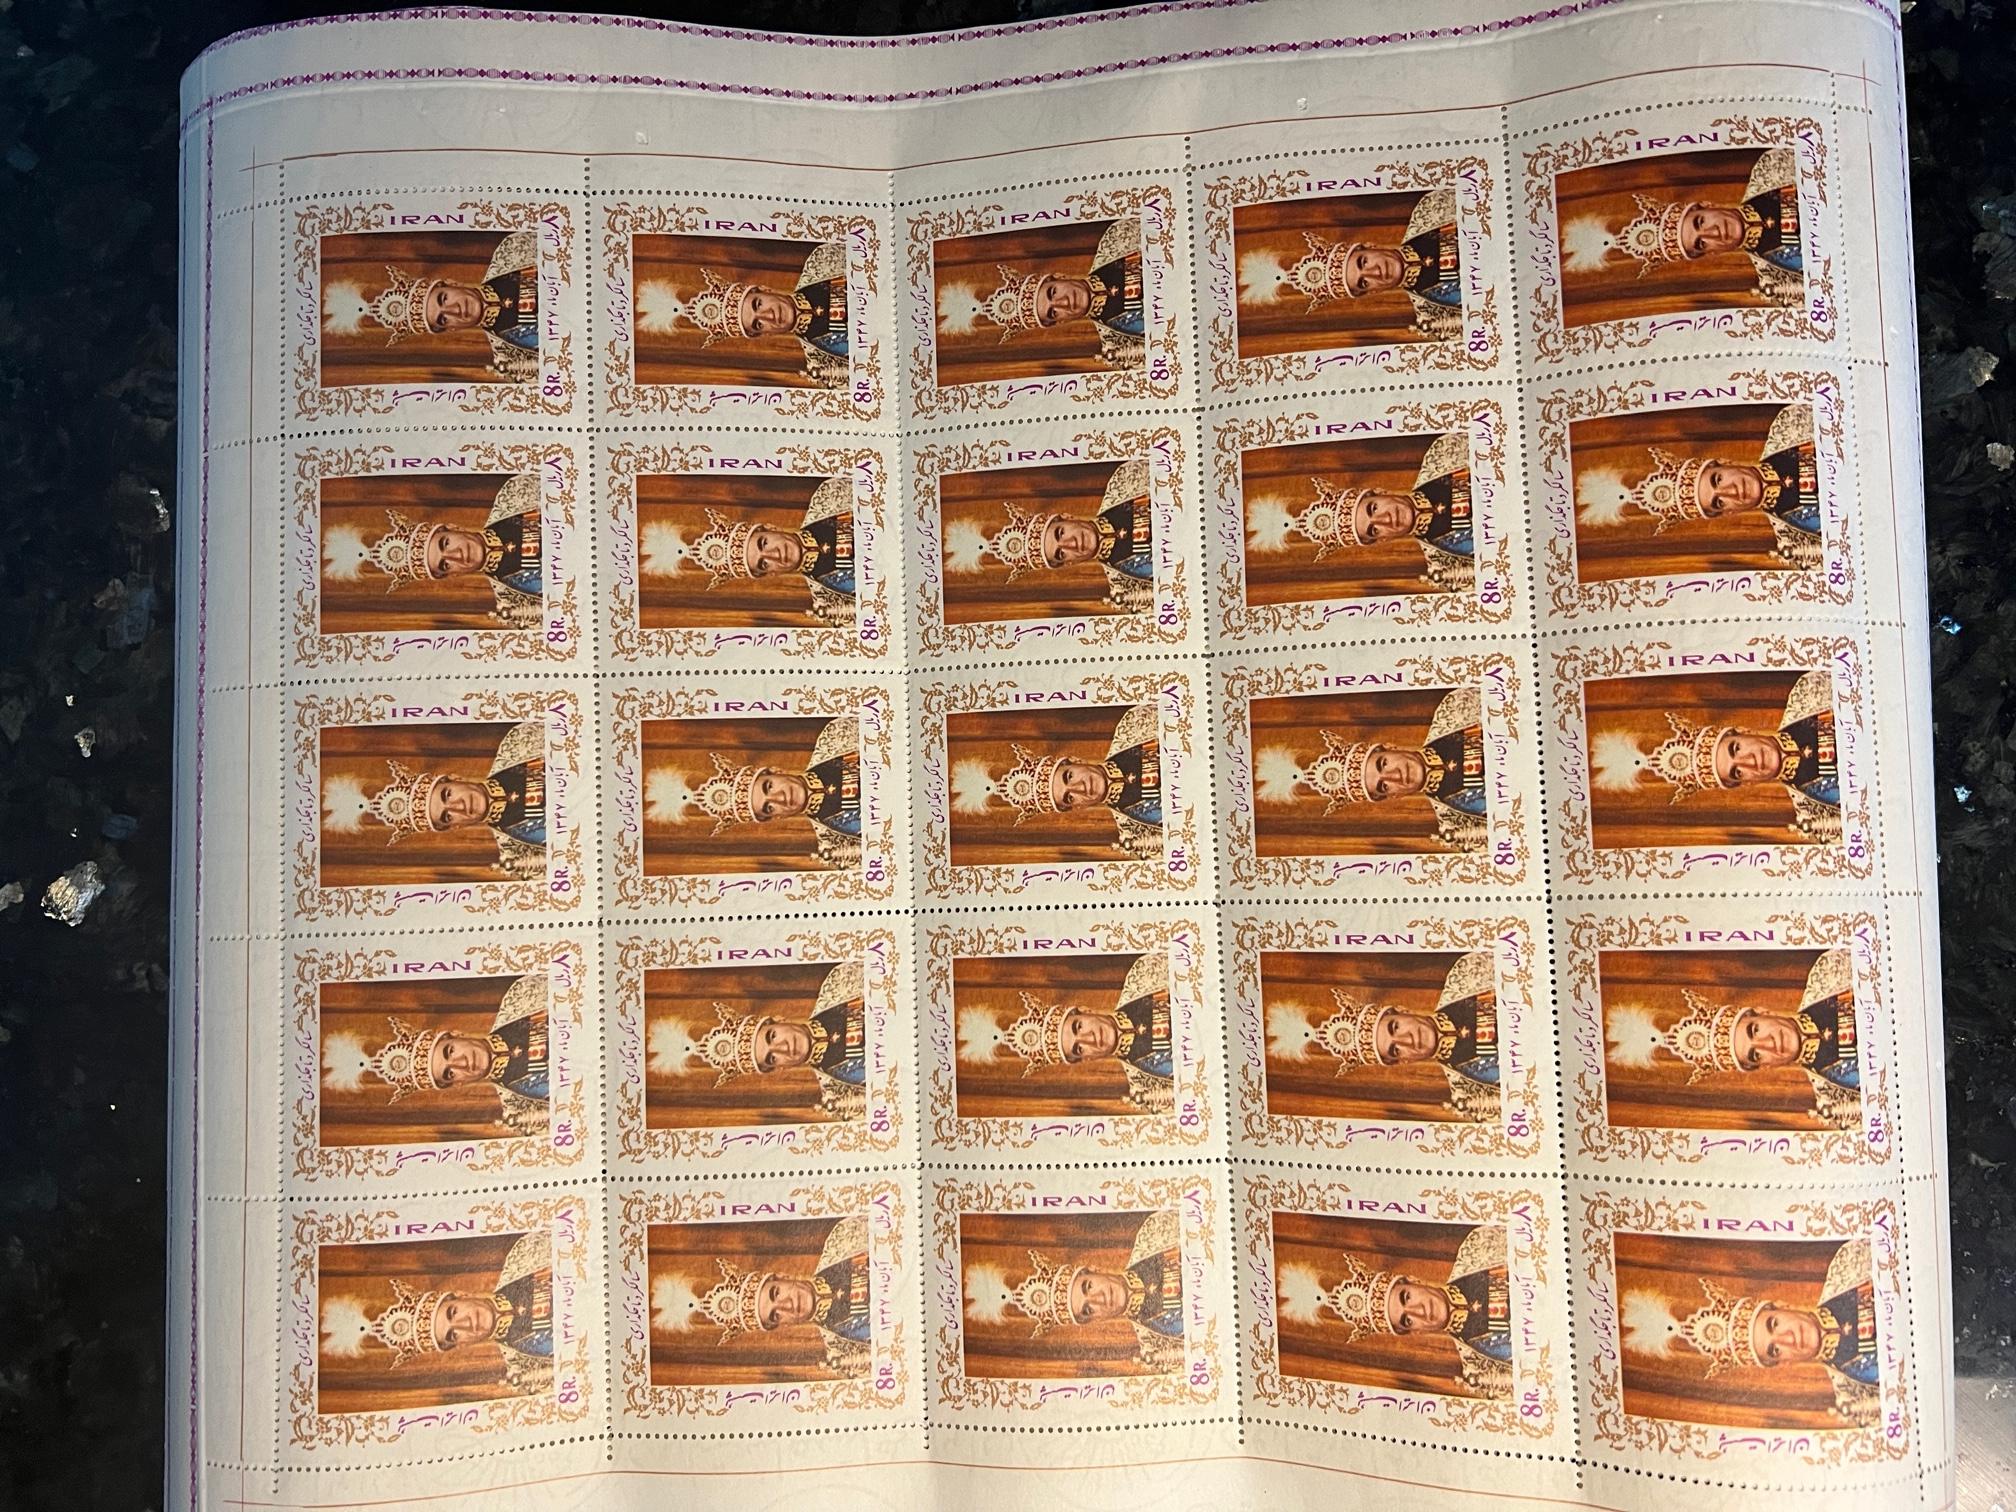 Coronation stamps - full sheet